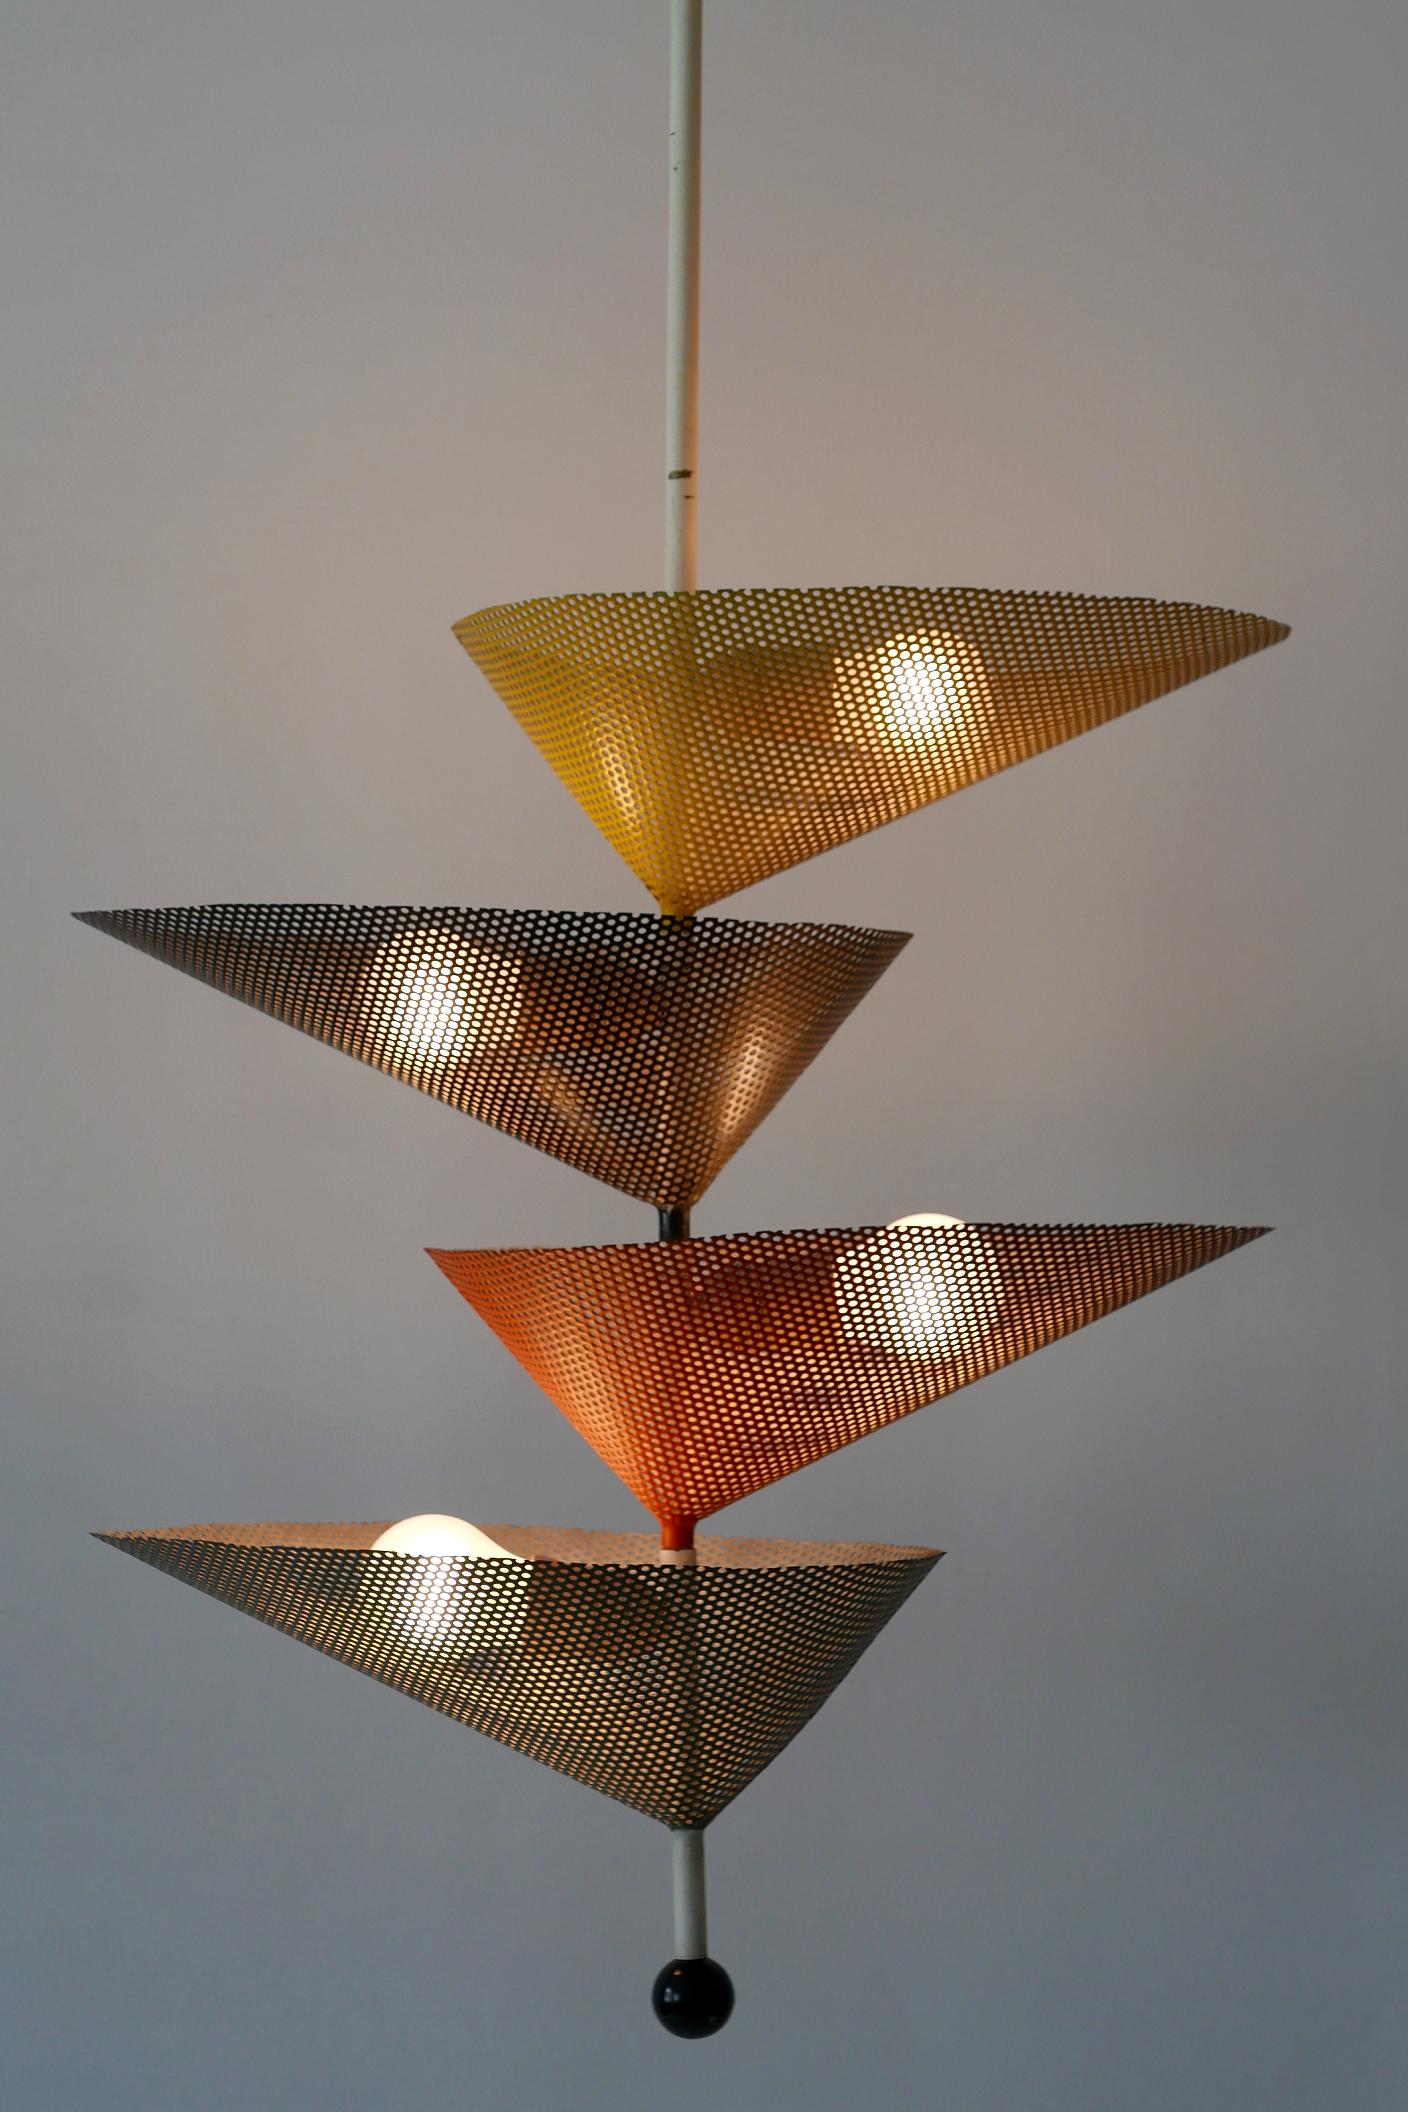 Rare Mid-Century Modern Chandelier or Pendant Lamp by Mathieu Matégot 1950s For Sale 2